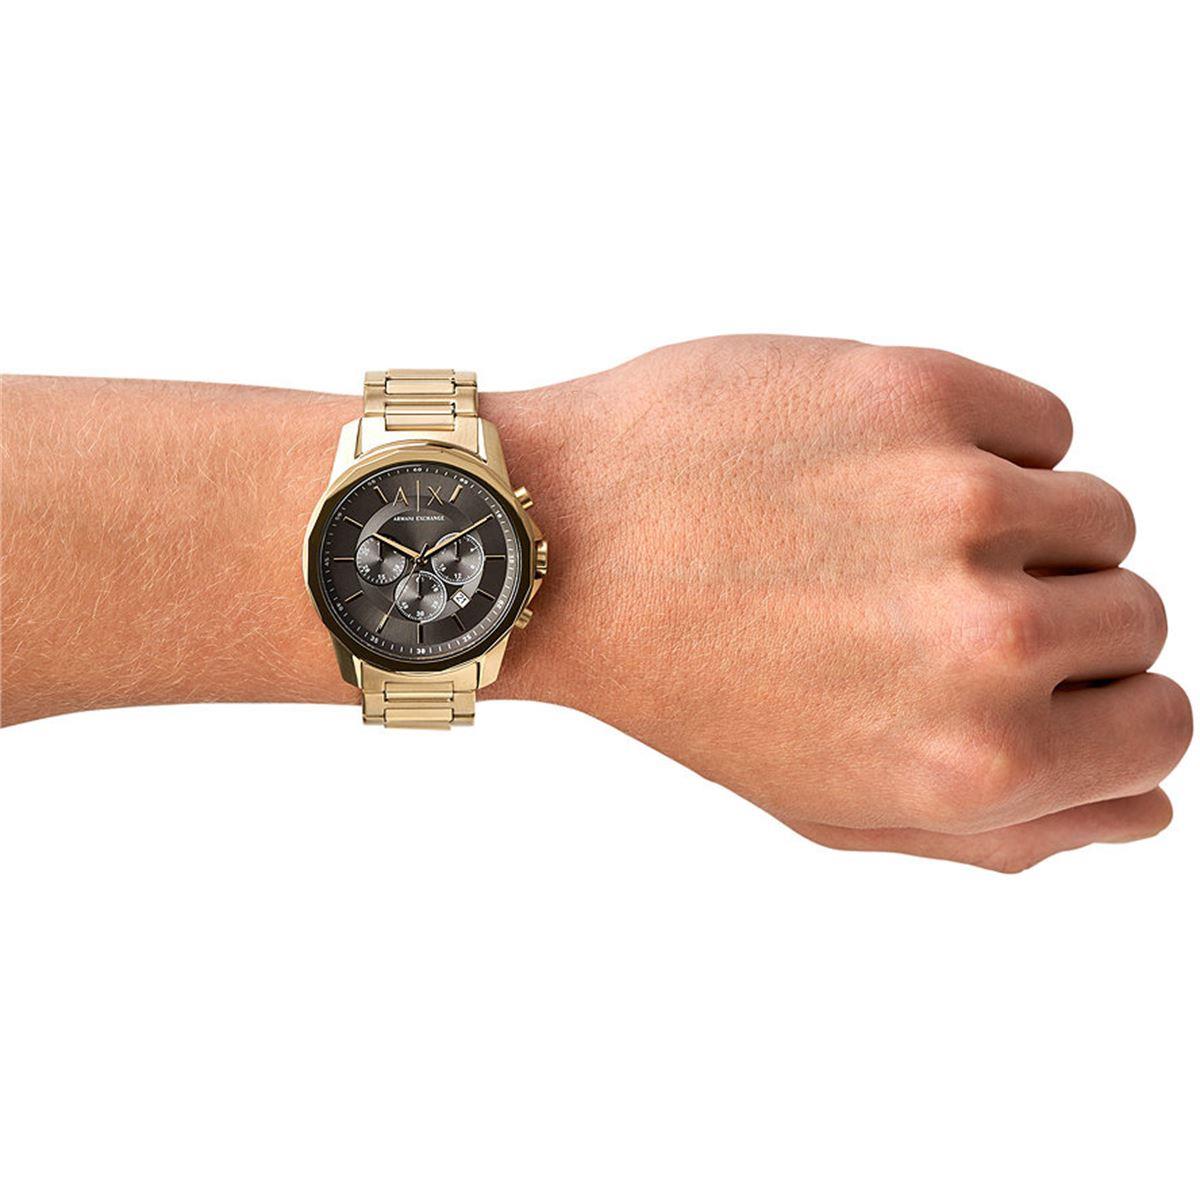 Armani Exchange AX1721 Chronograph Men's Watch